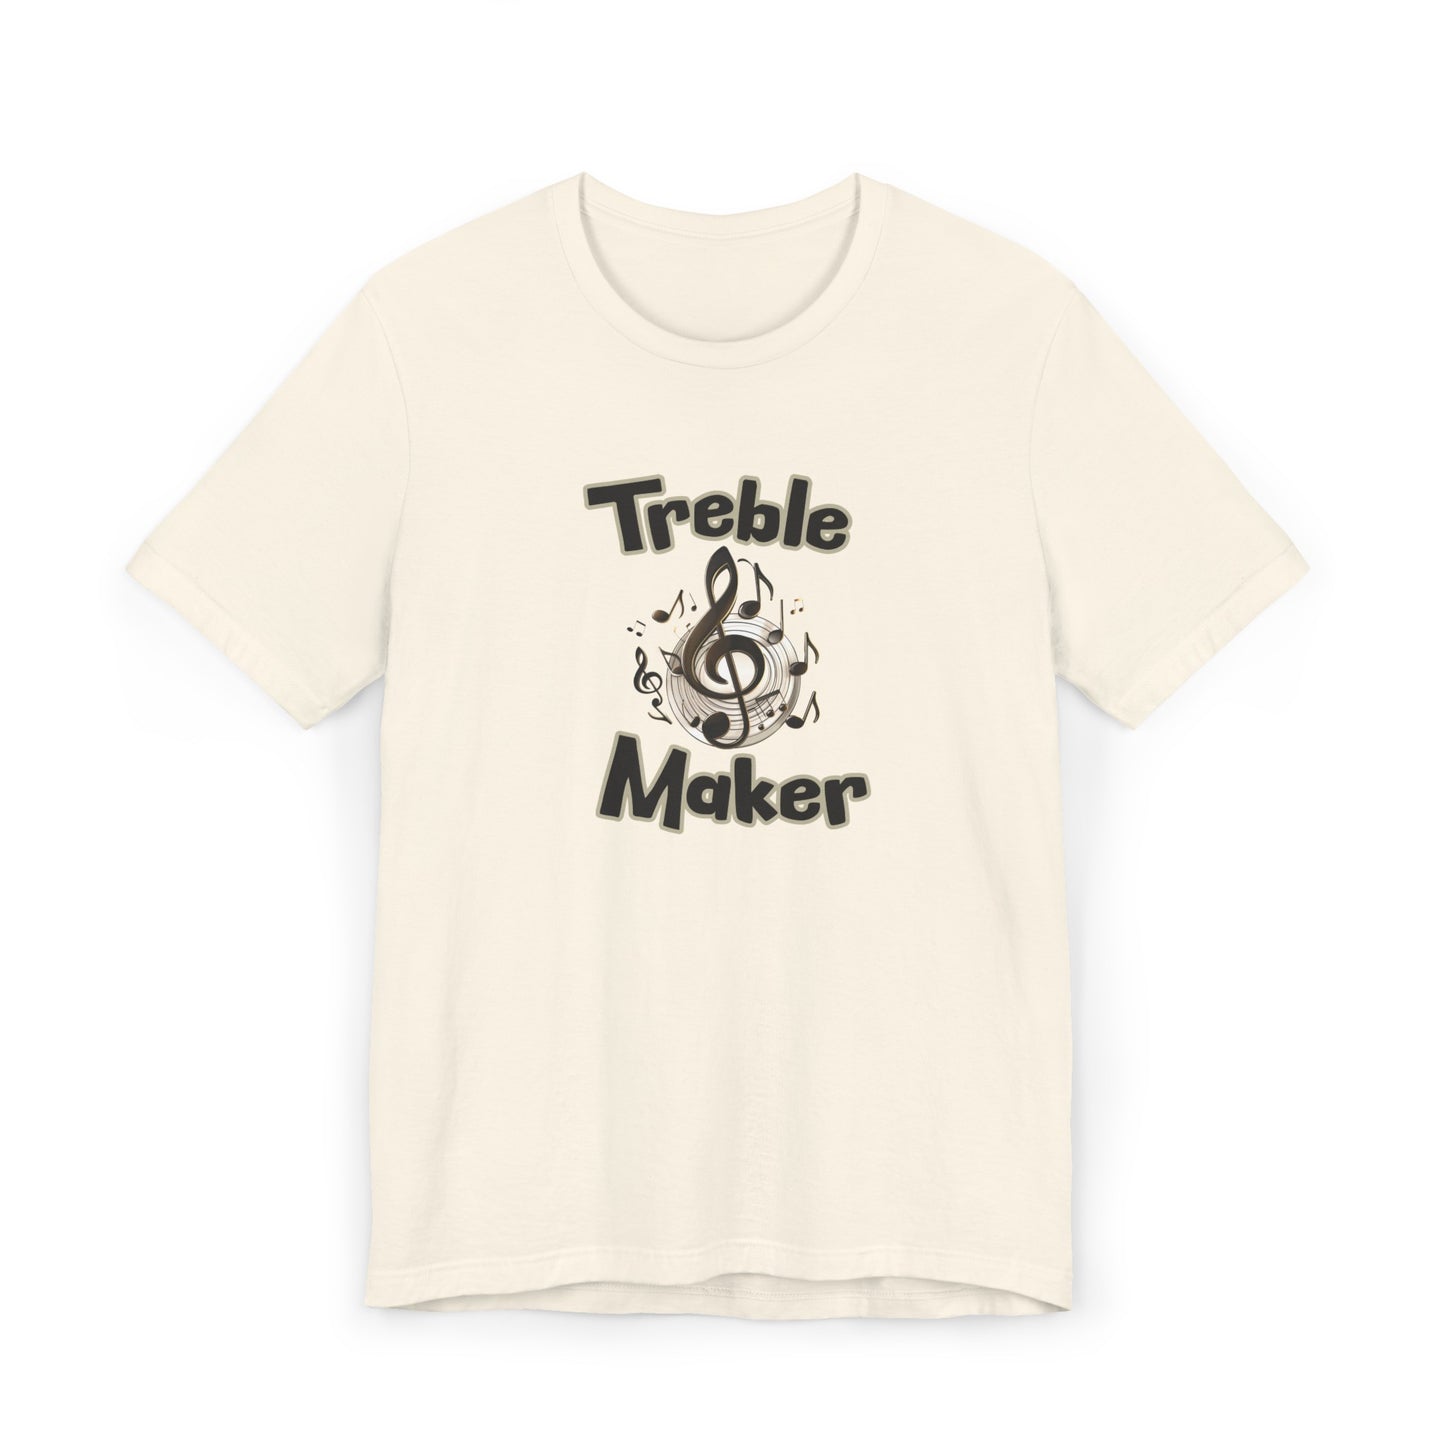 Treble Maker T-shirt in Natural color 